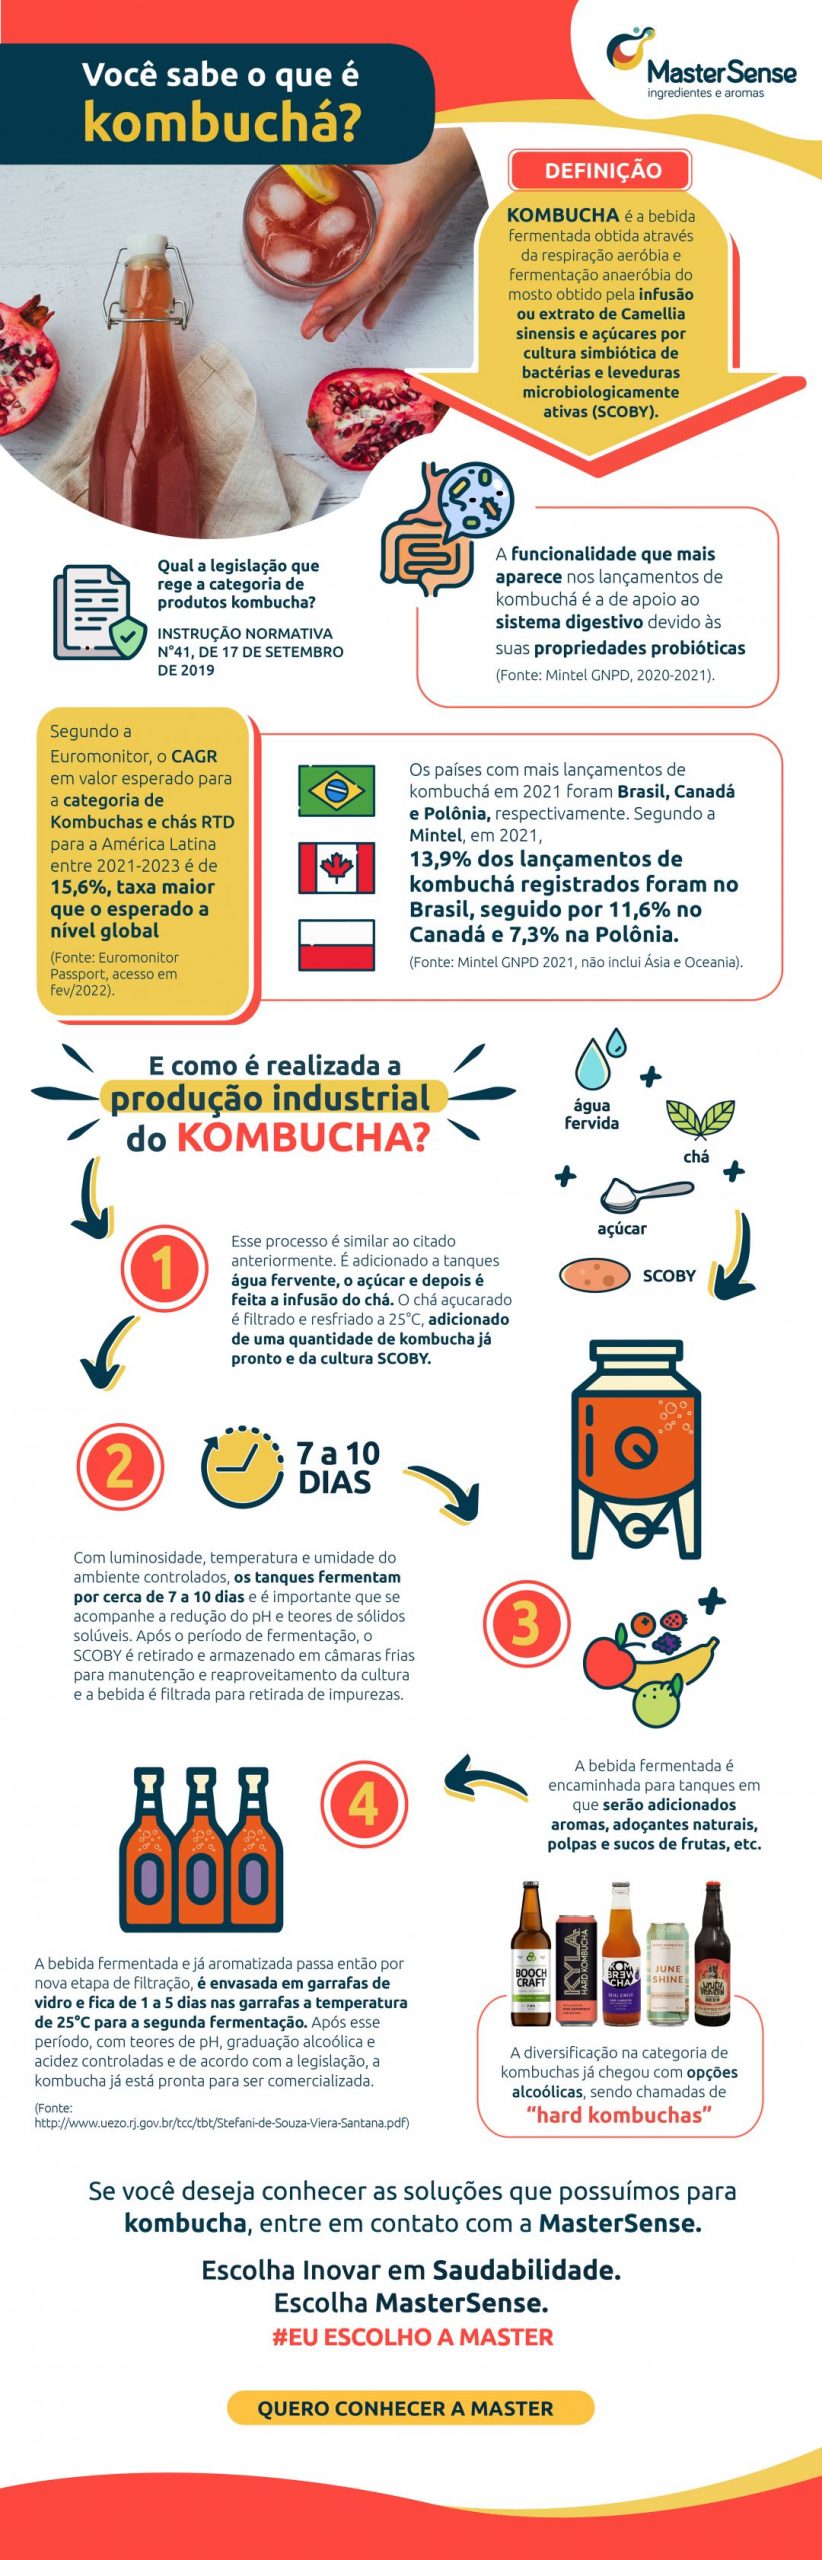 info-kombucha